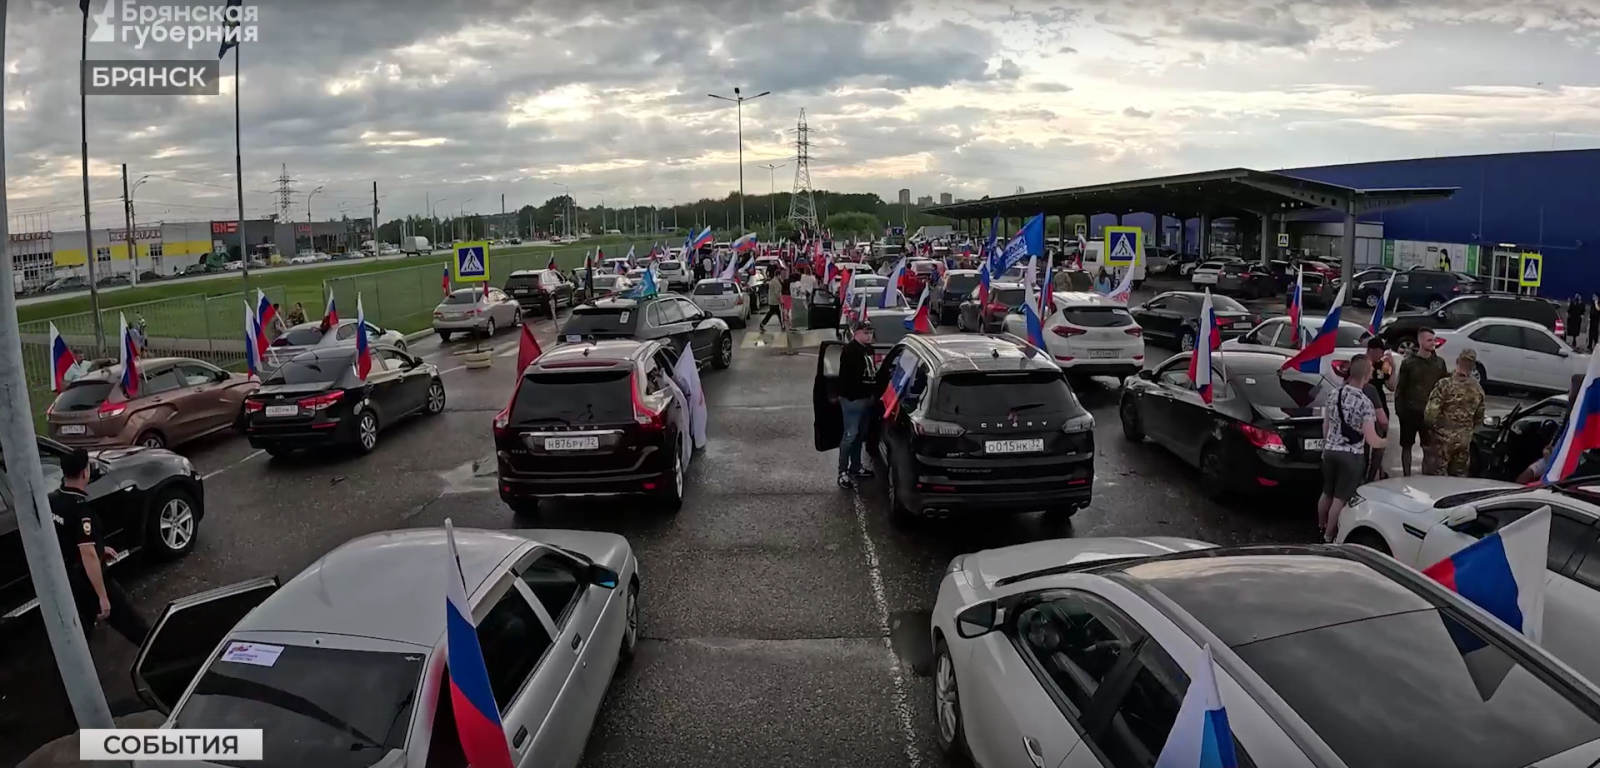 В Брянске прошёл патриотический автопробег